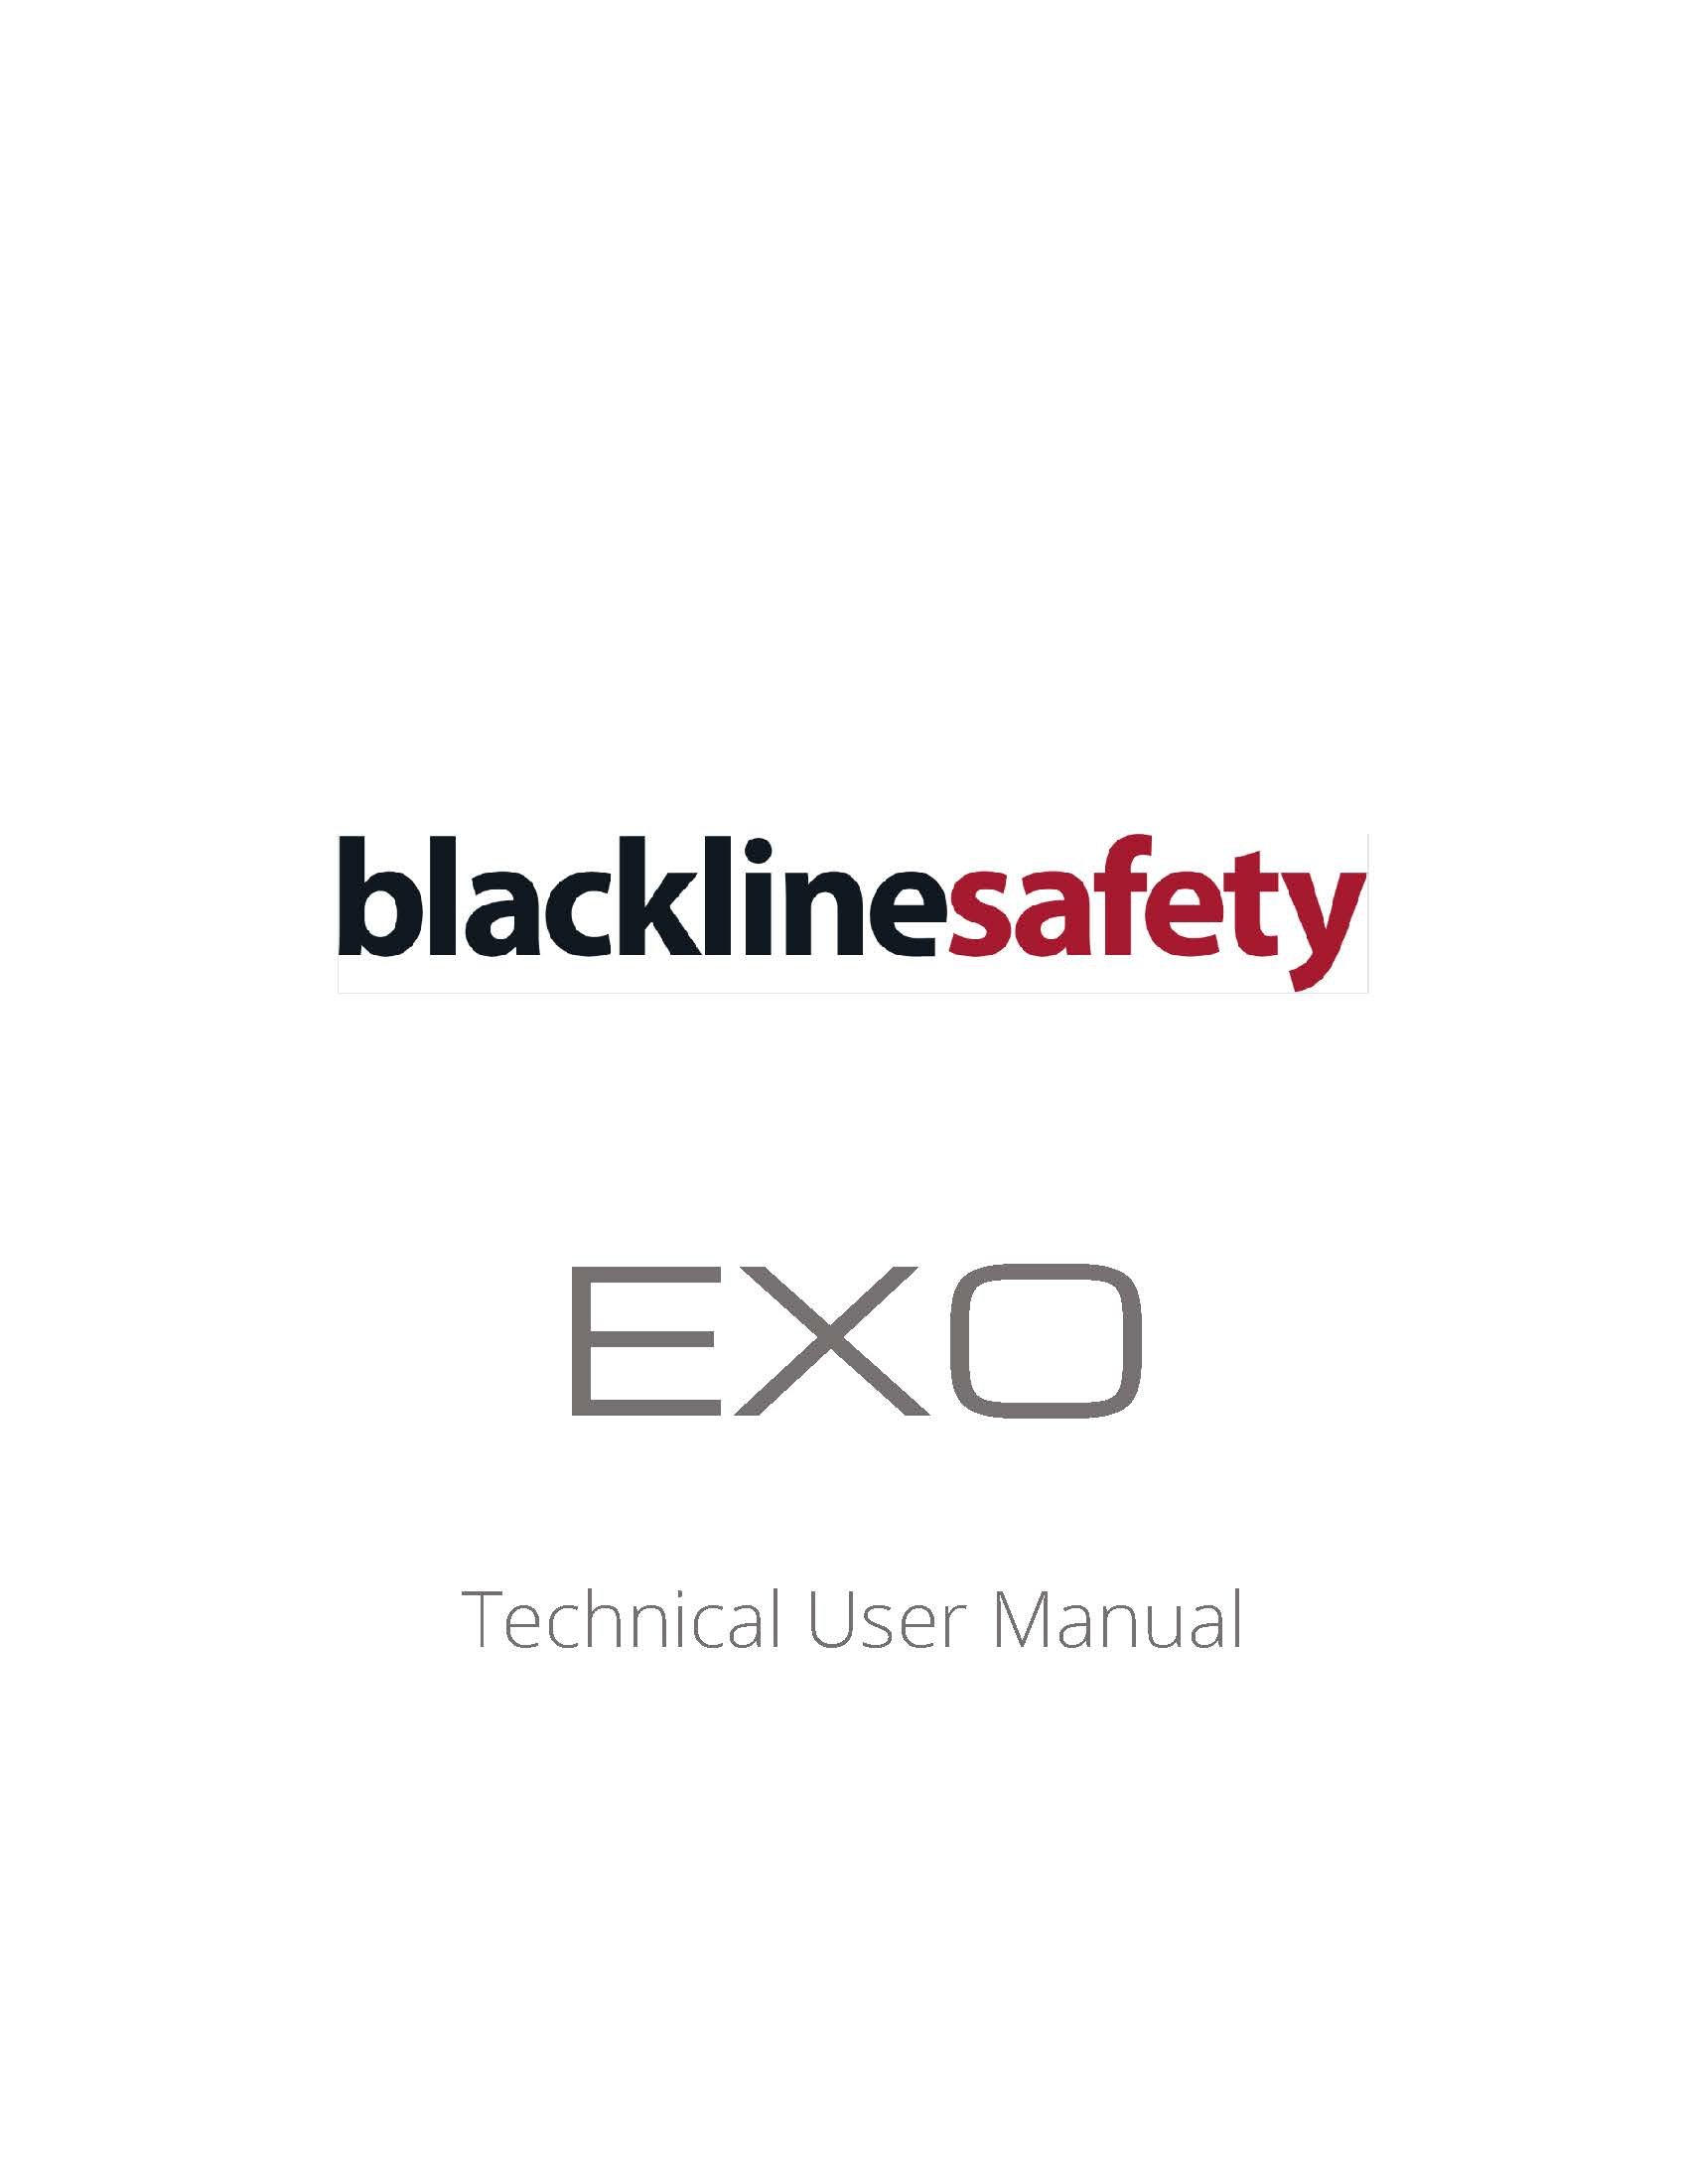 EXO Technical User Manual_R10 - PT - página de rosto